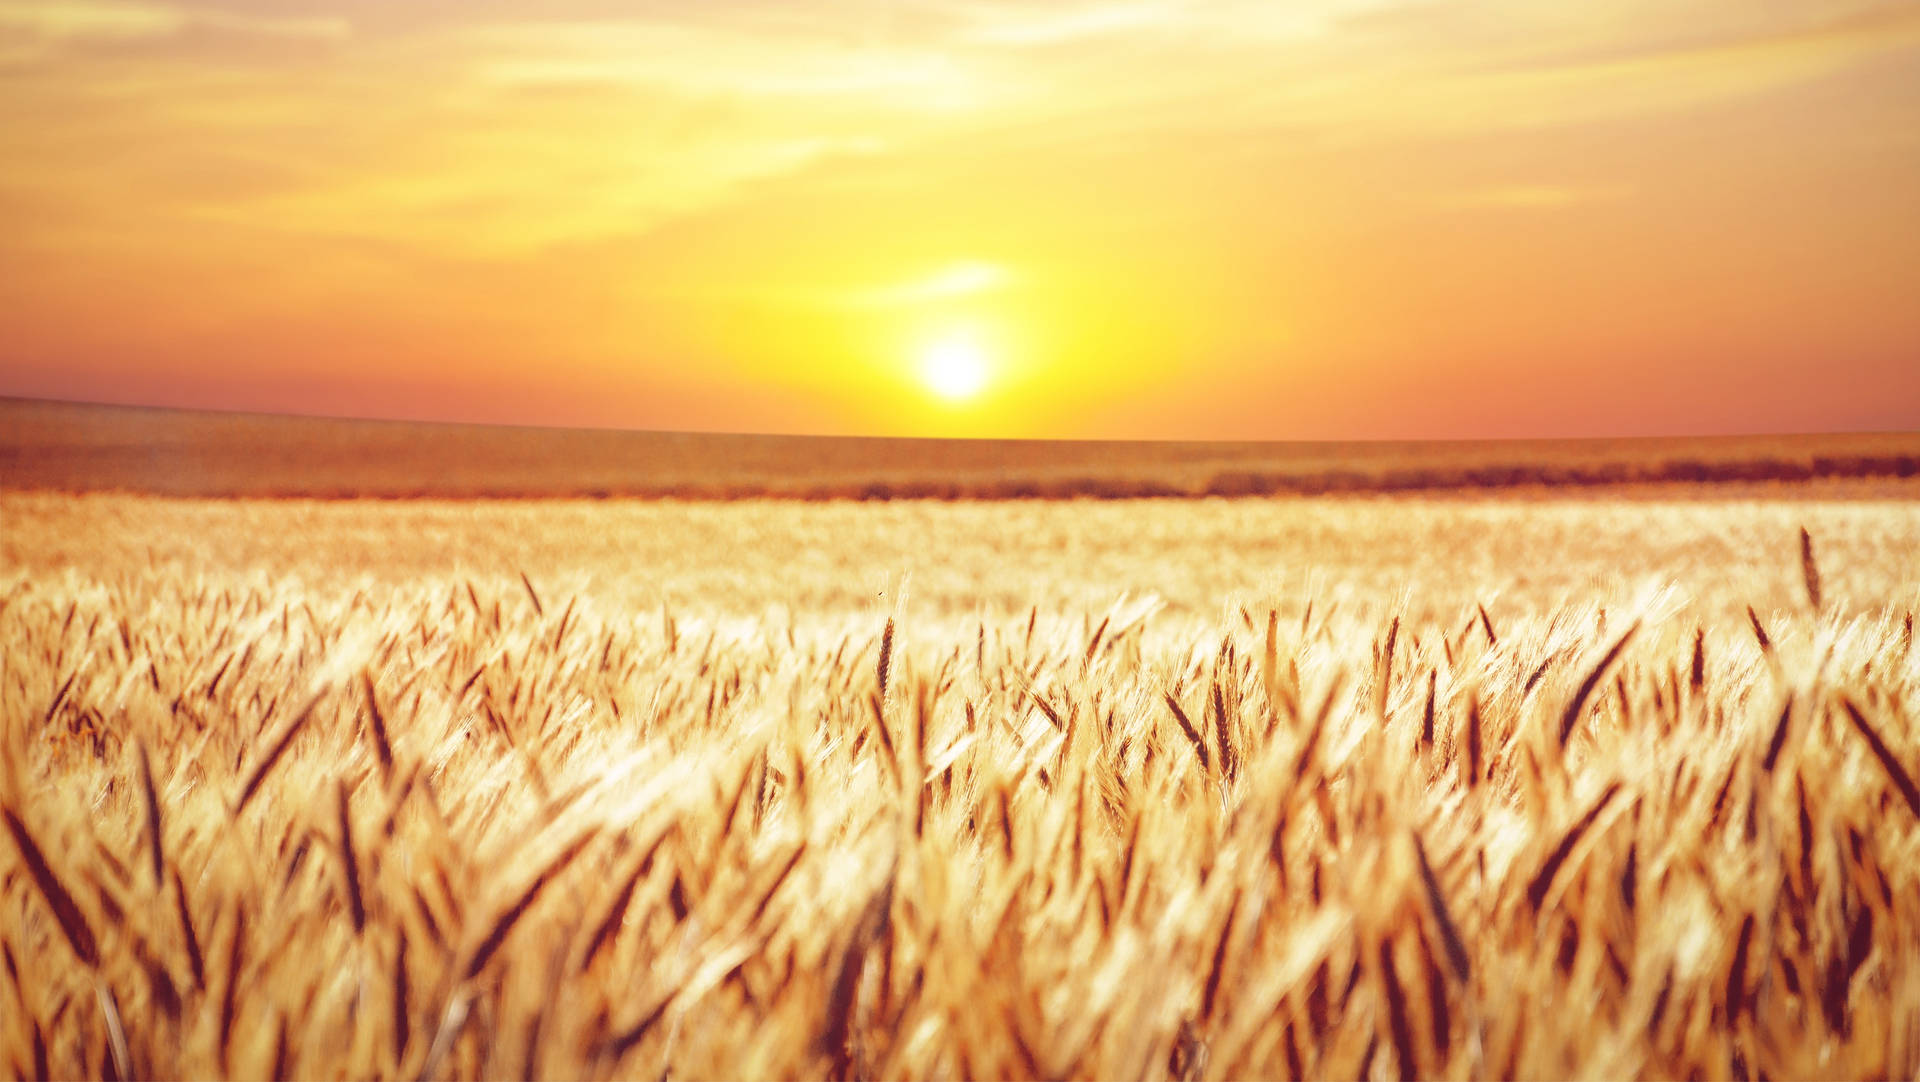 Wheat Field Under Orange And Yellow Sky Wallpaper